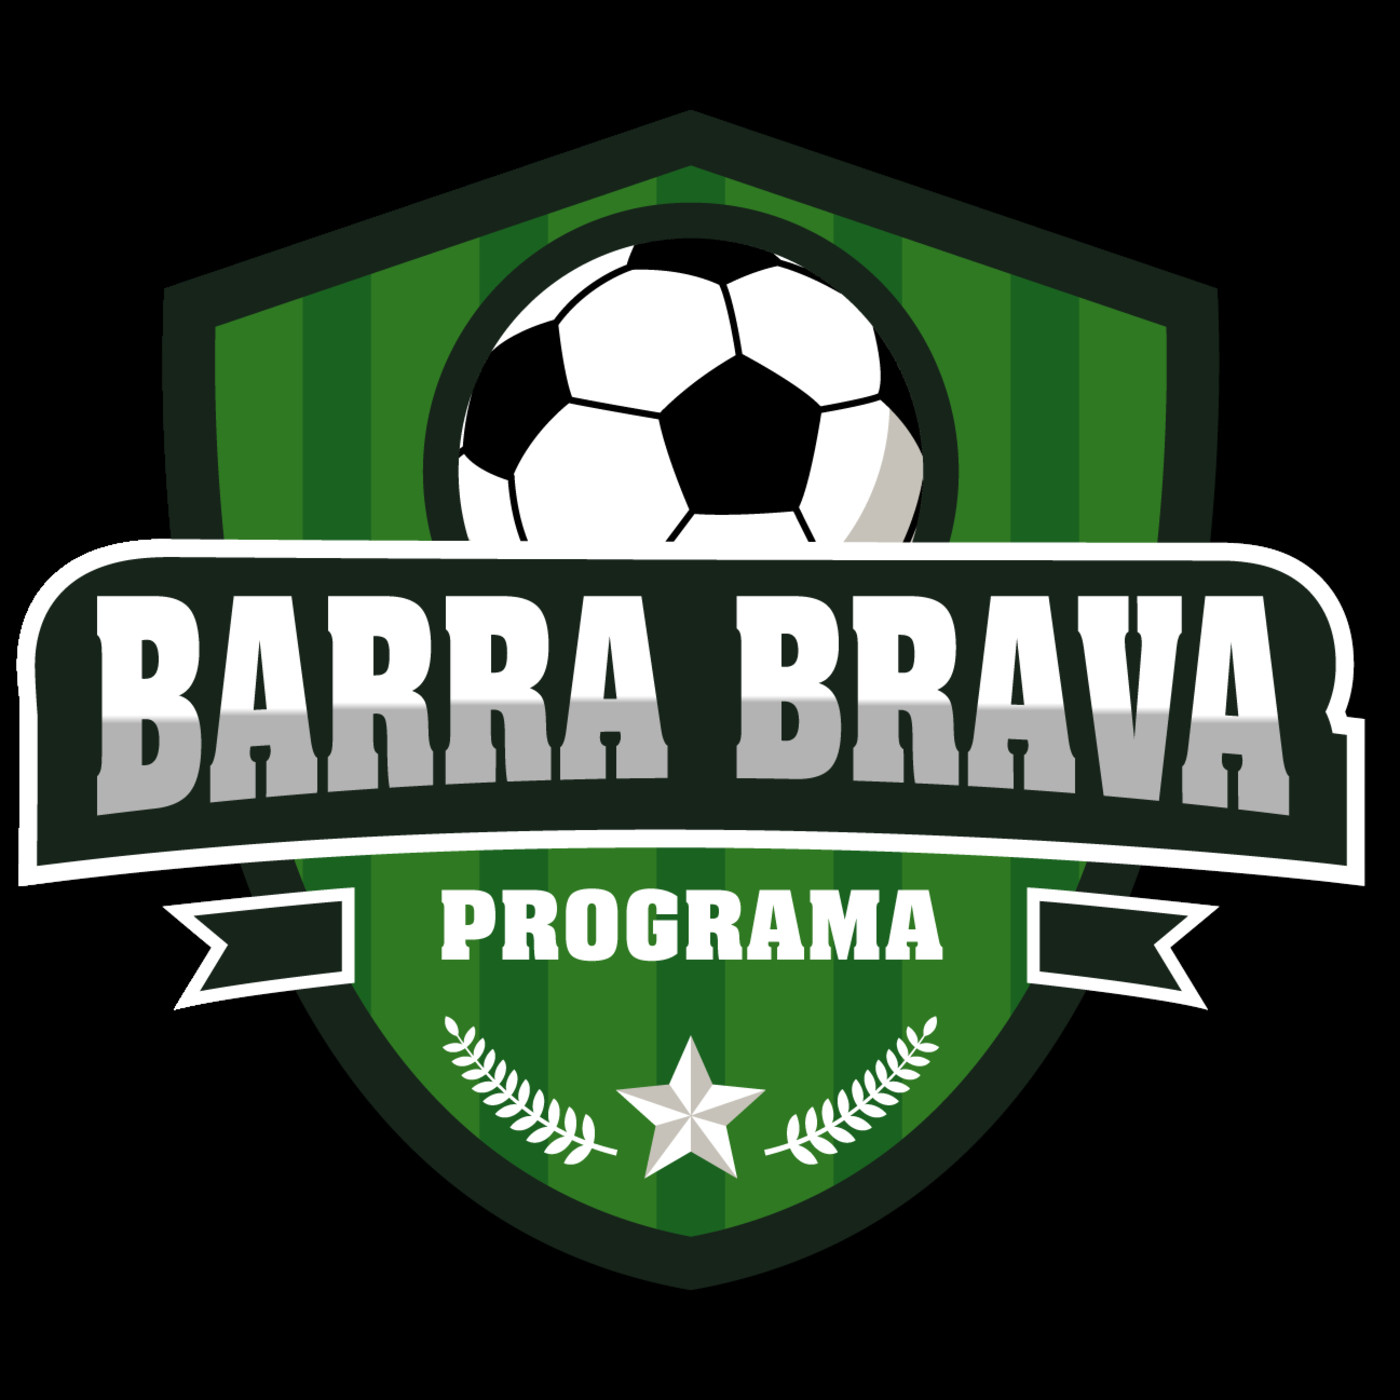 15. Podcast BARRA BRAVA Programa 22 de julio de 2019